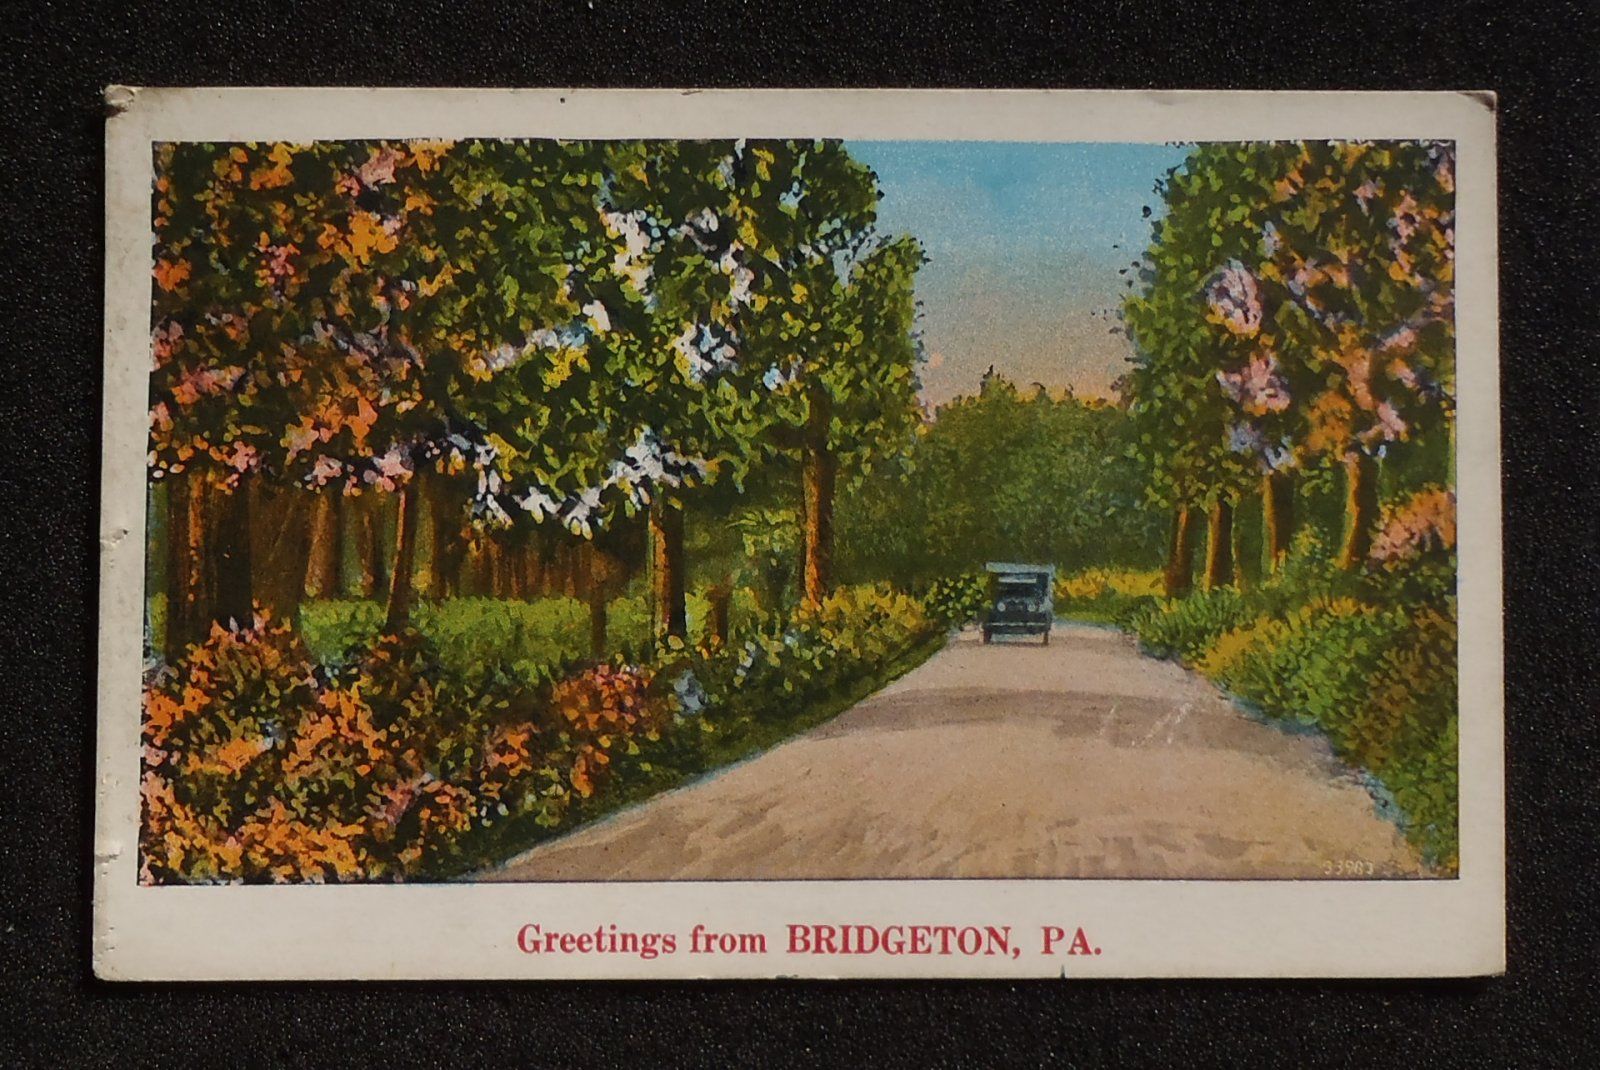   Old Car on Country Road Greetings Bridgeton PA York Co Postcard